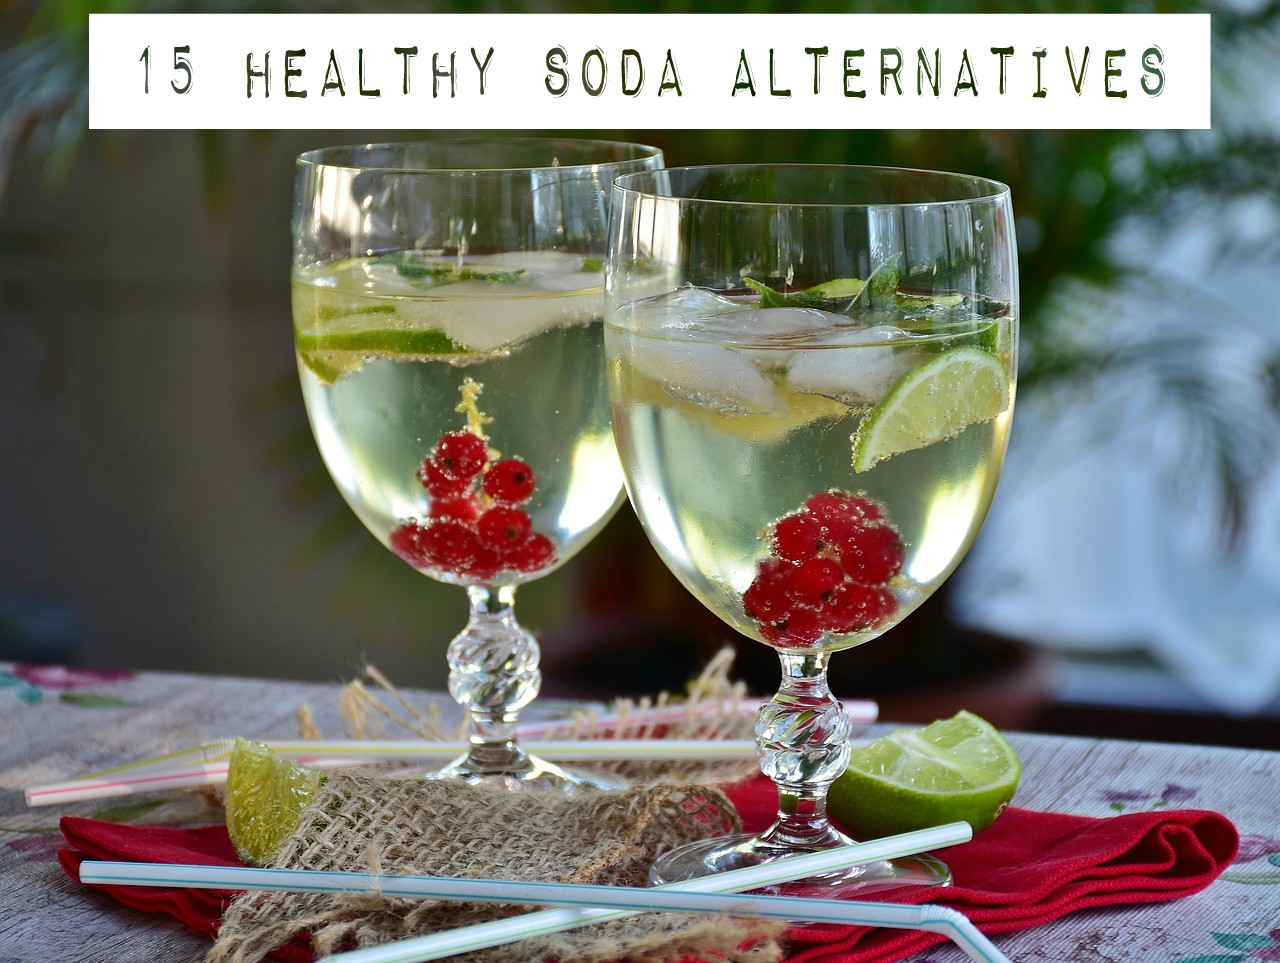 Healthy drinks, alternative to soda, replace soda